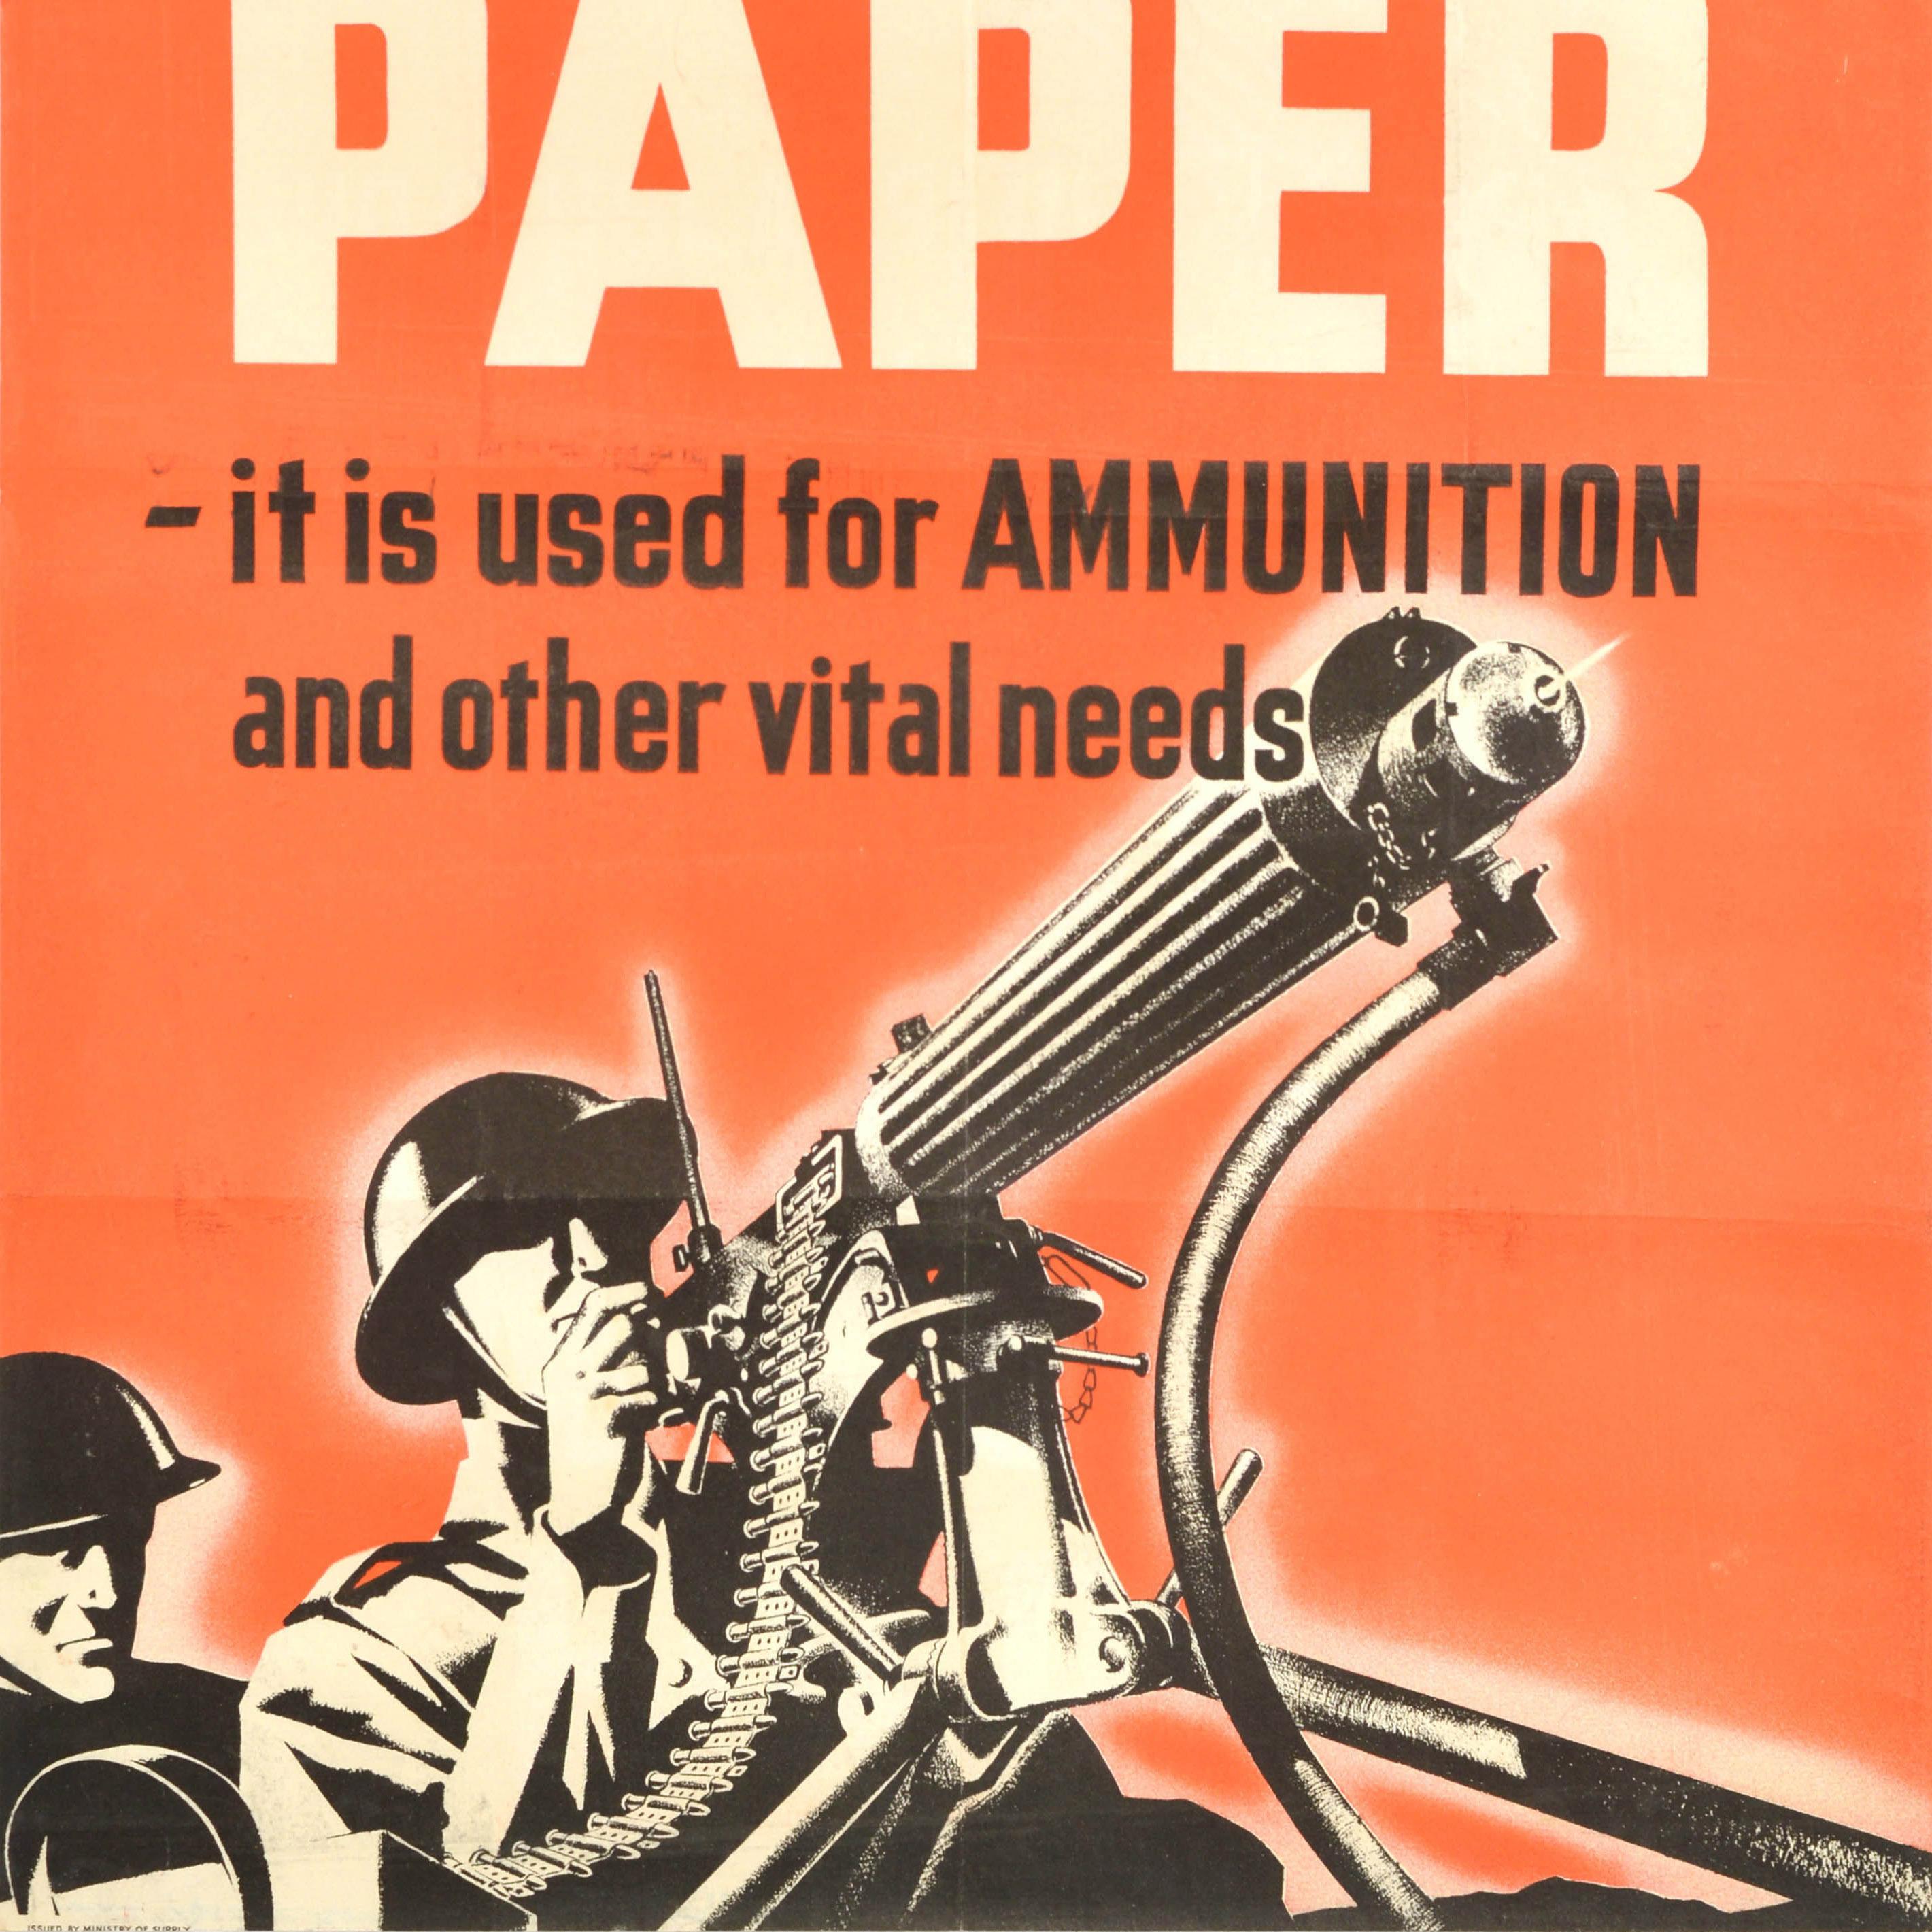 recycle propaganda poster